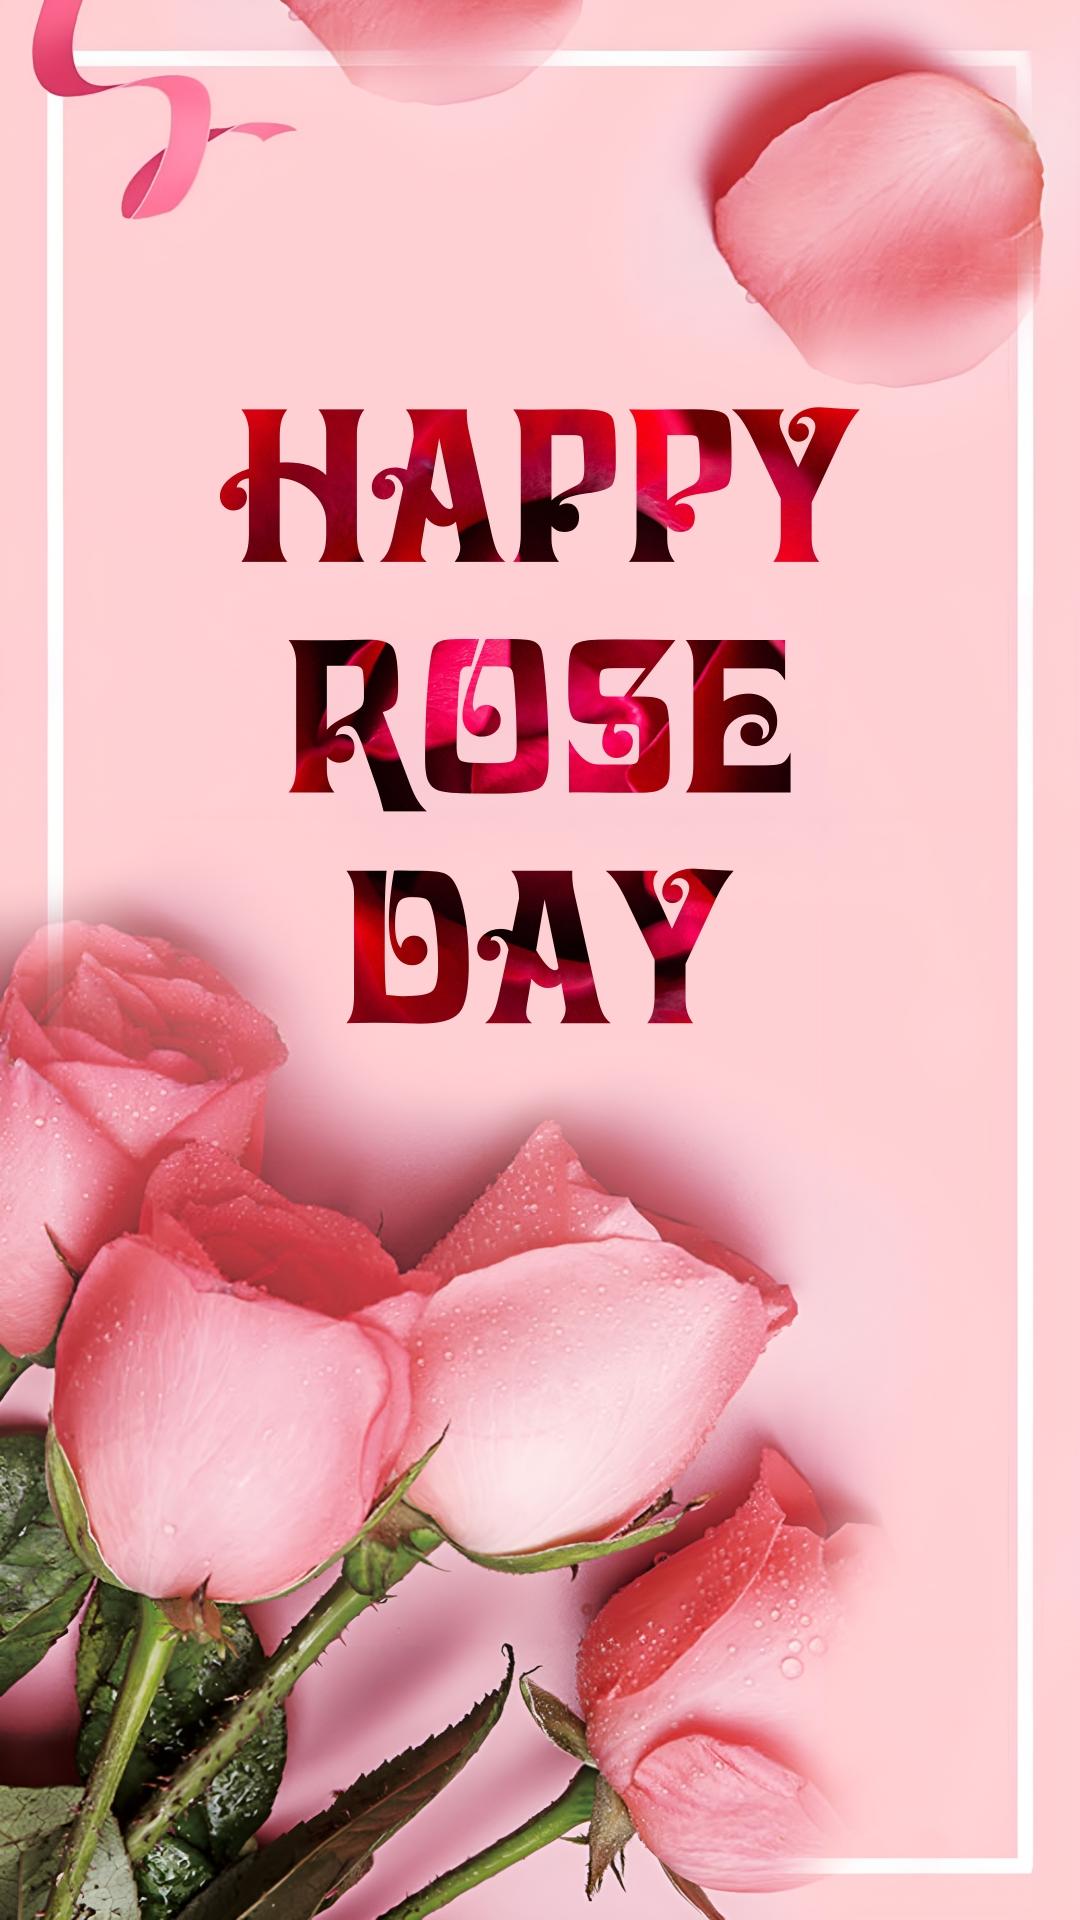 1080p Happy Rose Day Wallpaper